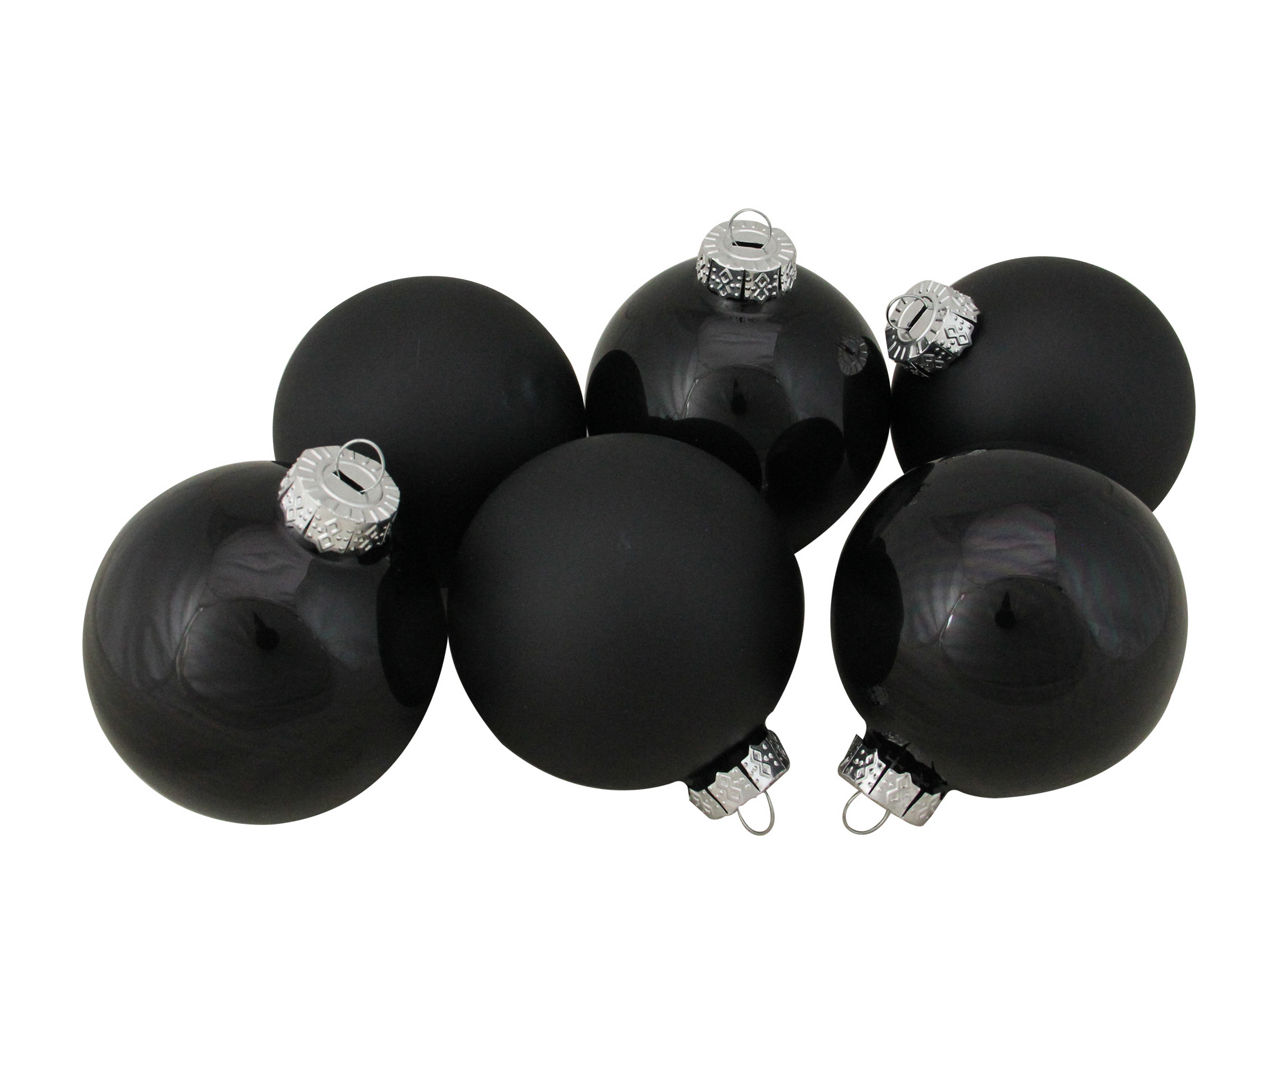 Northlight Black Shiny & Matte Ball Glass Ornaments, 6-Pack